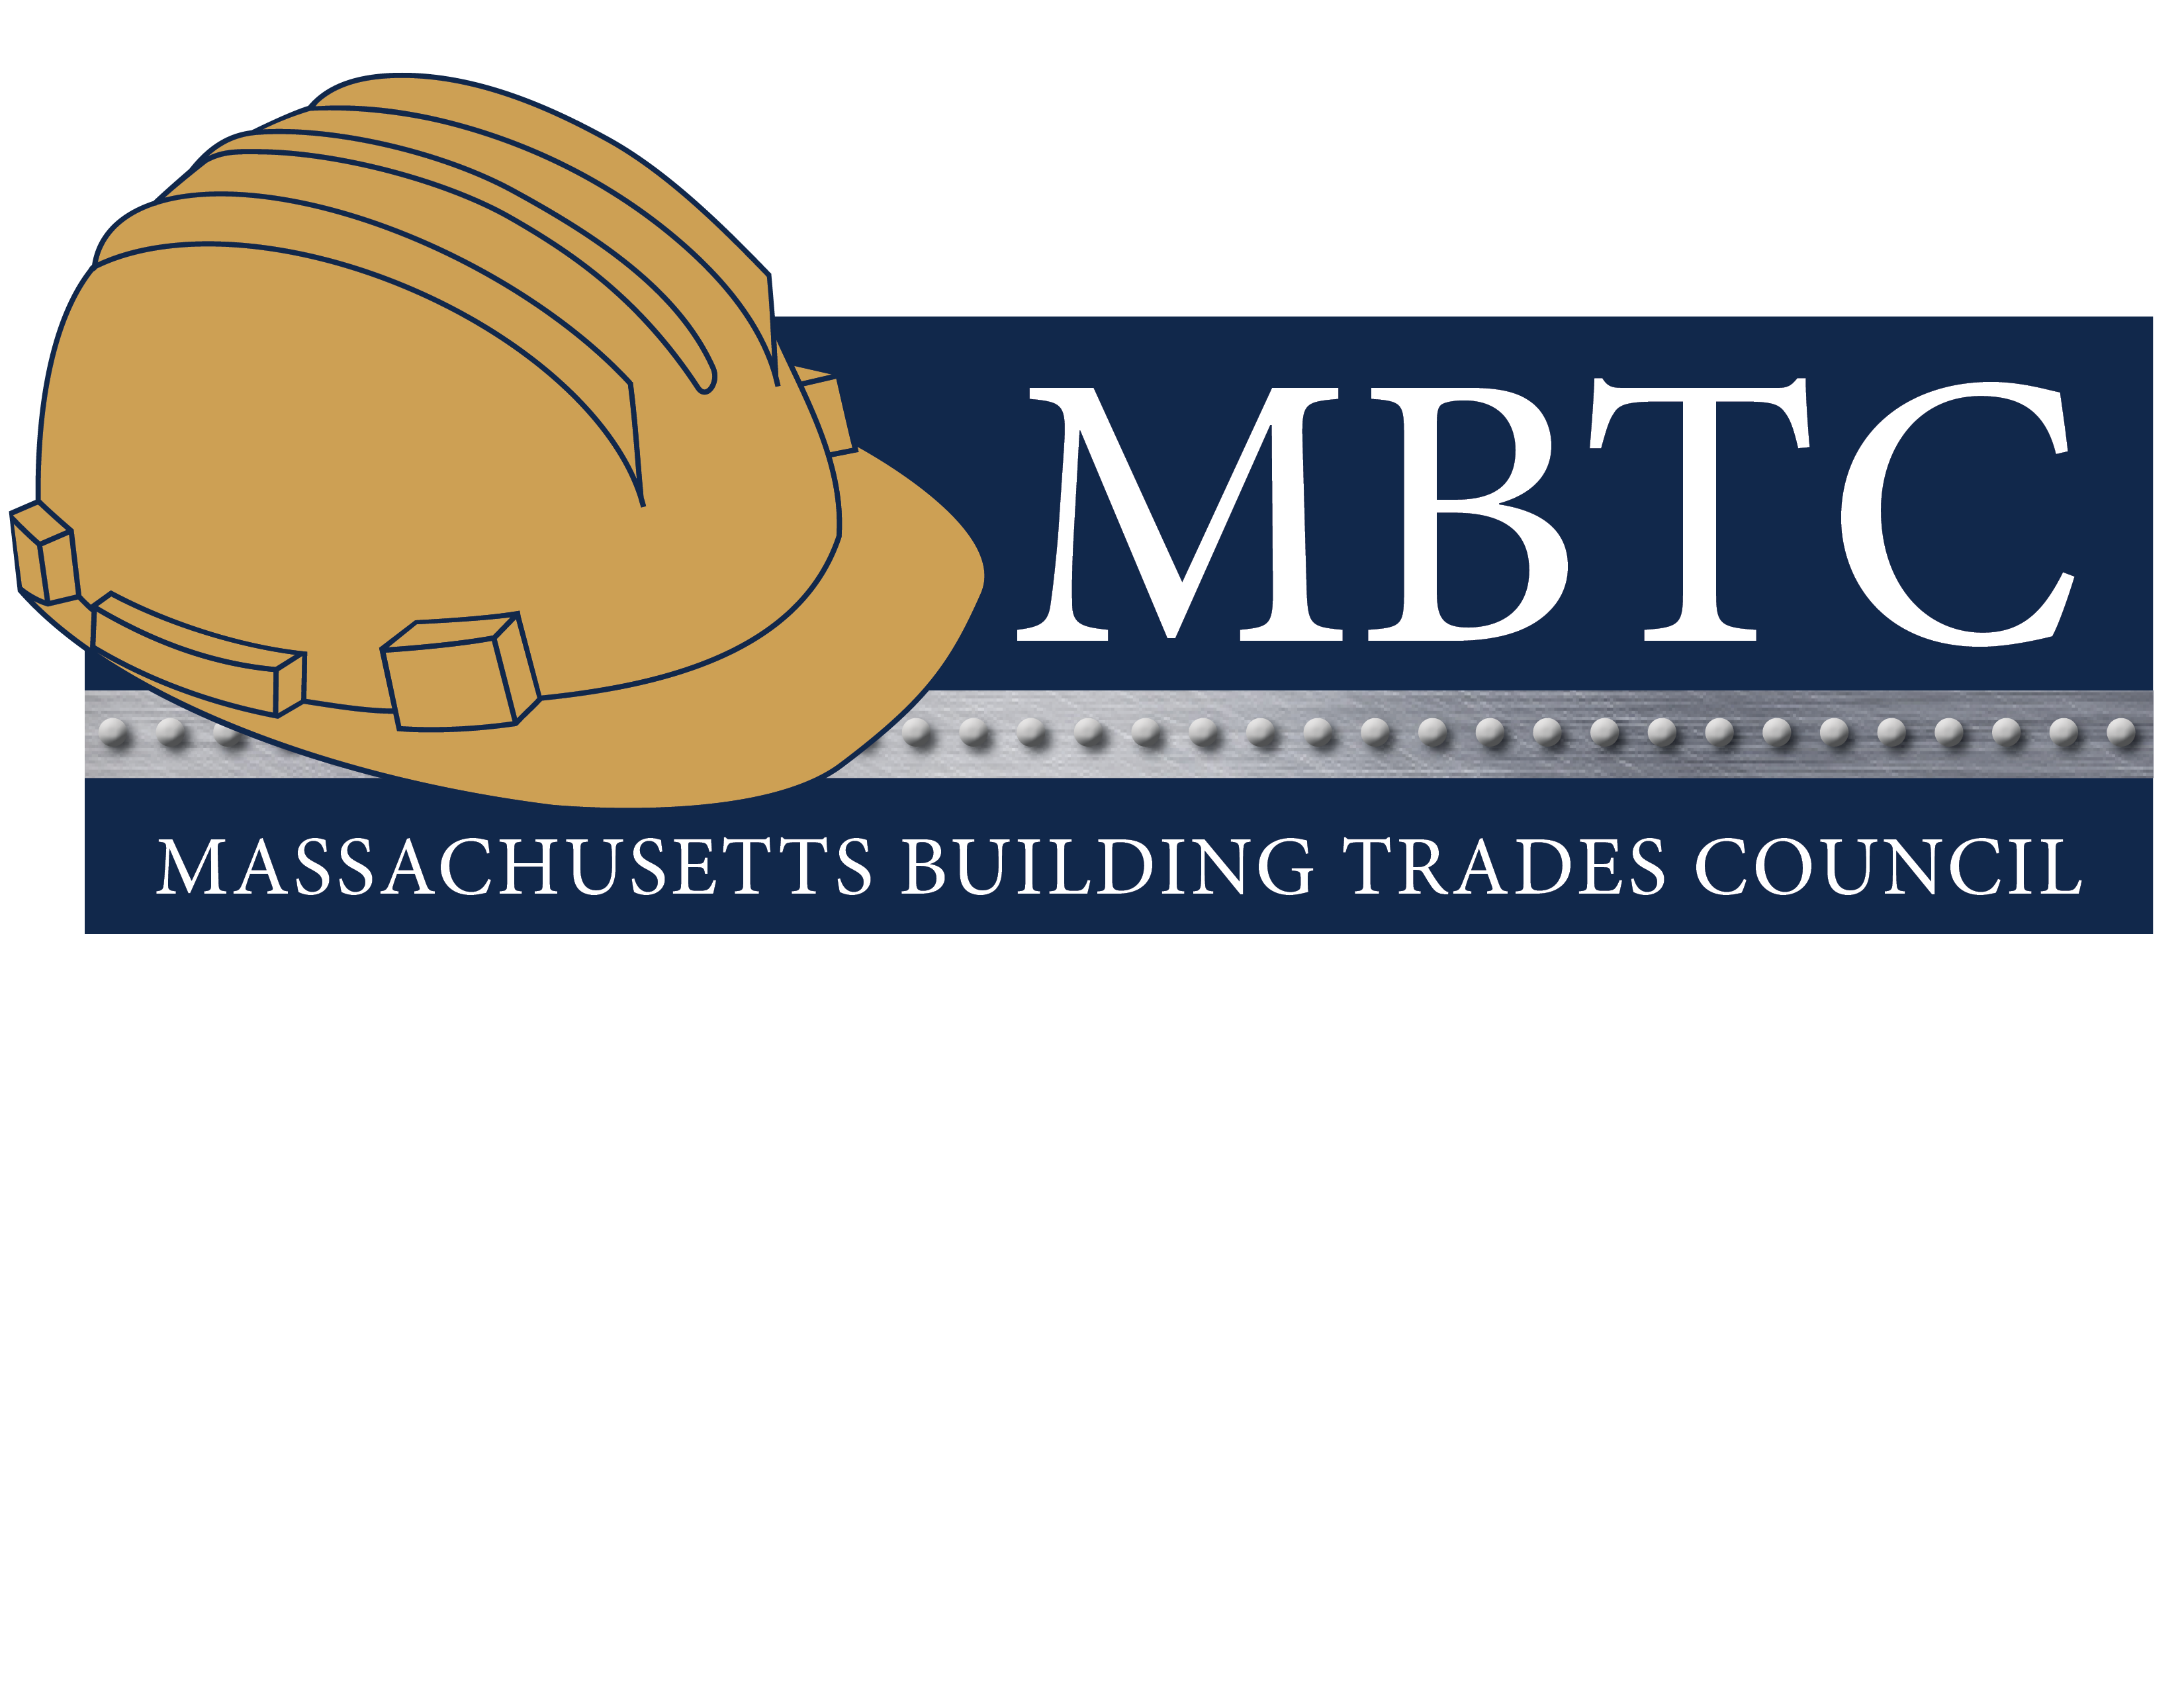 Southeastern Massachusetts Building Trades Council